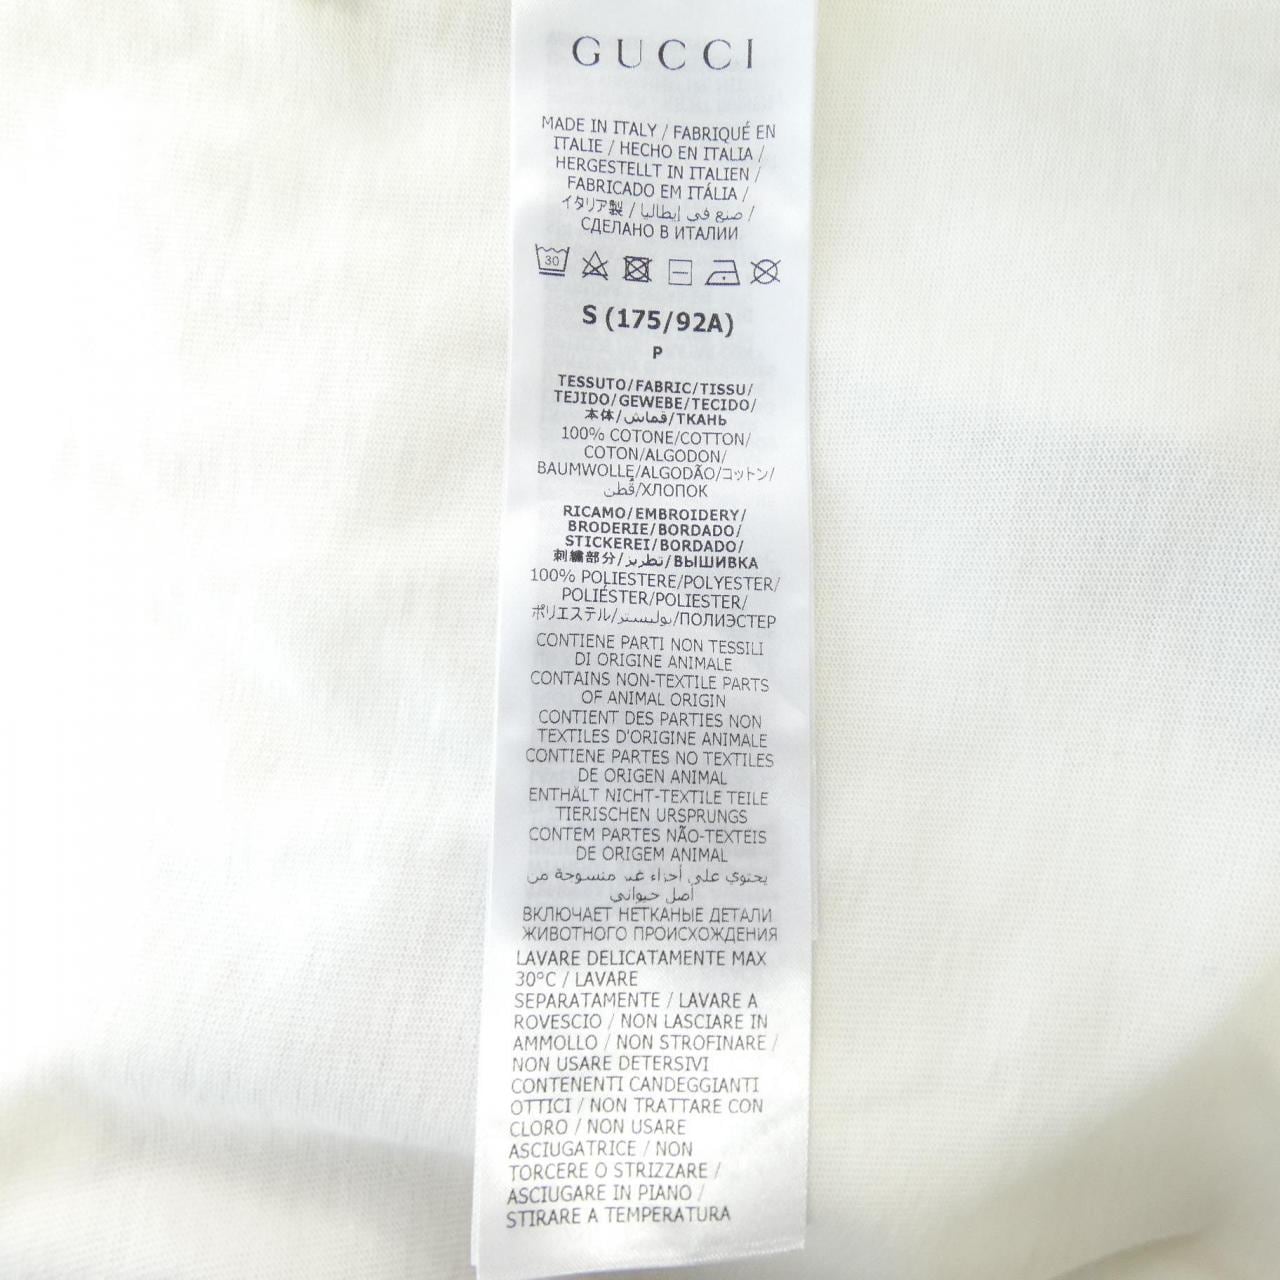 Gucci GUCCI polo shirt